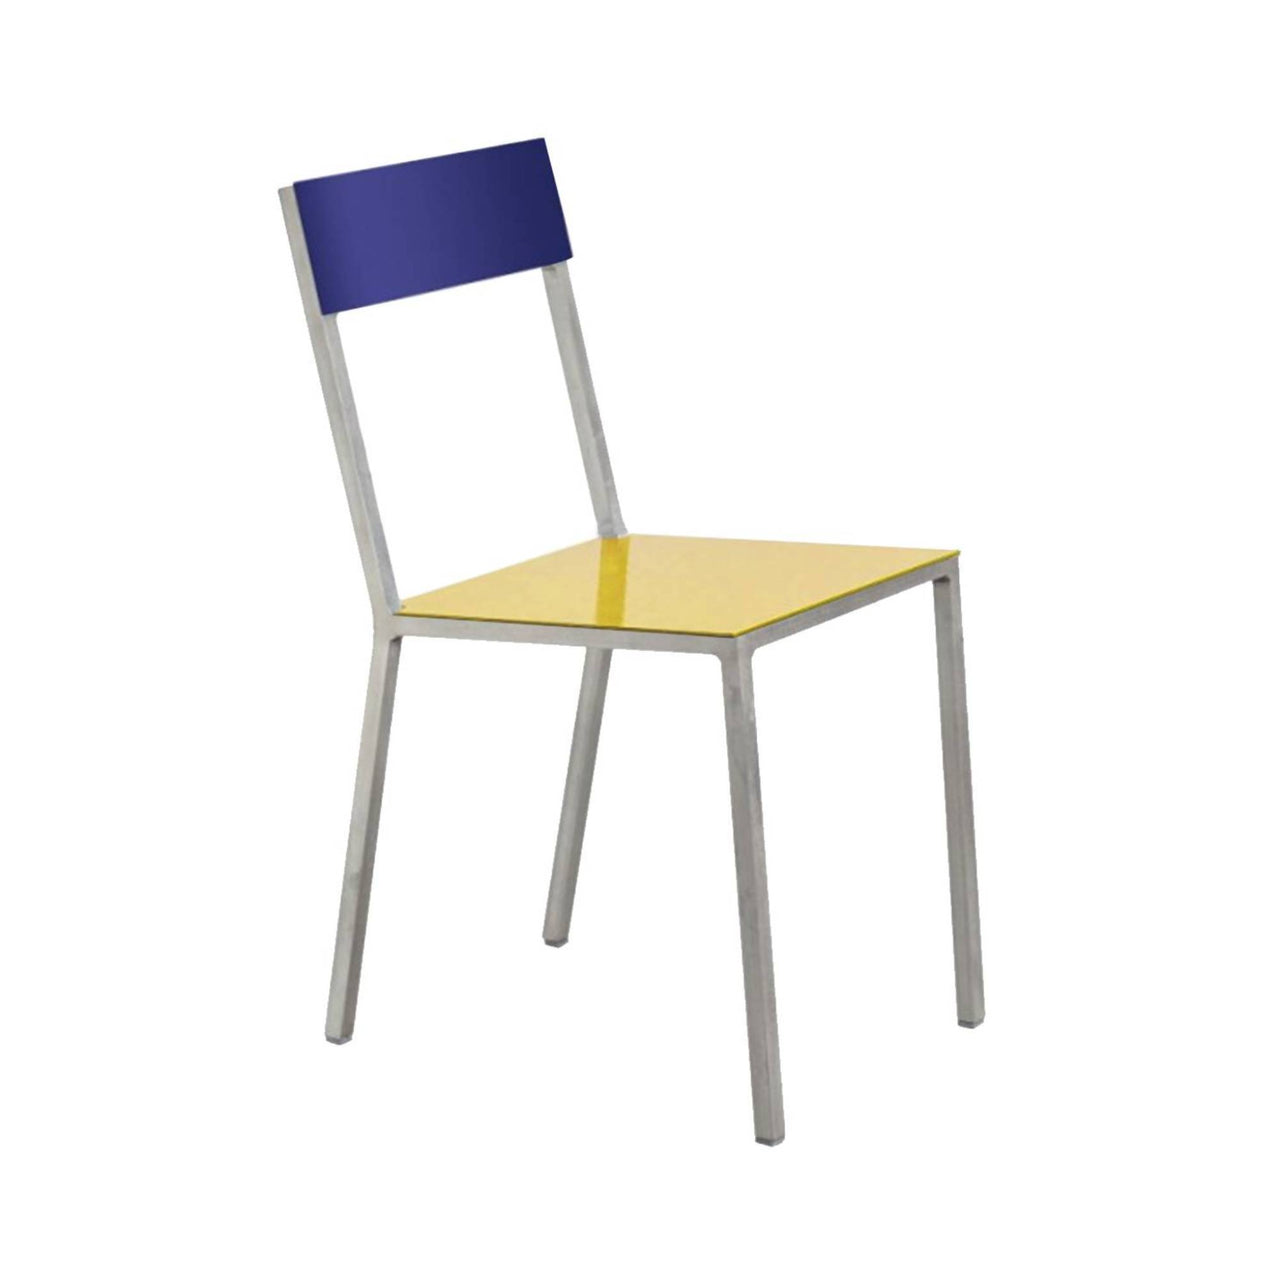 Alu Chair: Yellow + Candy Blue + Aluminum